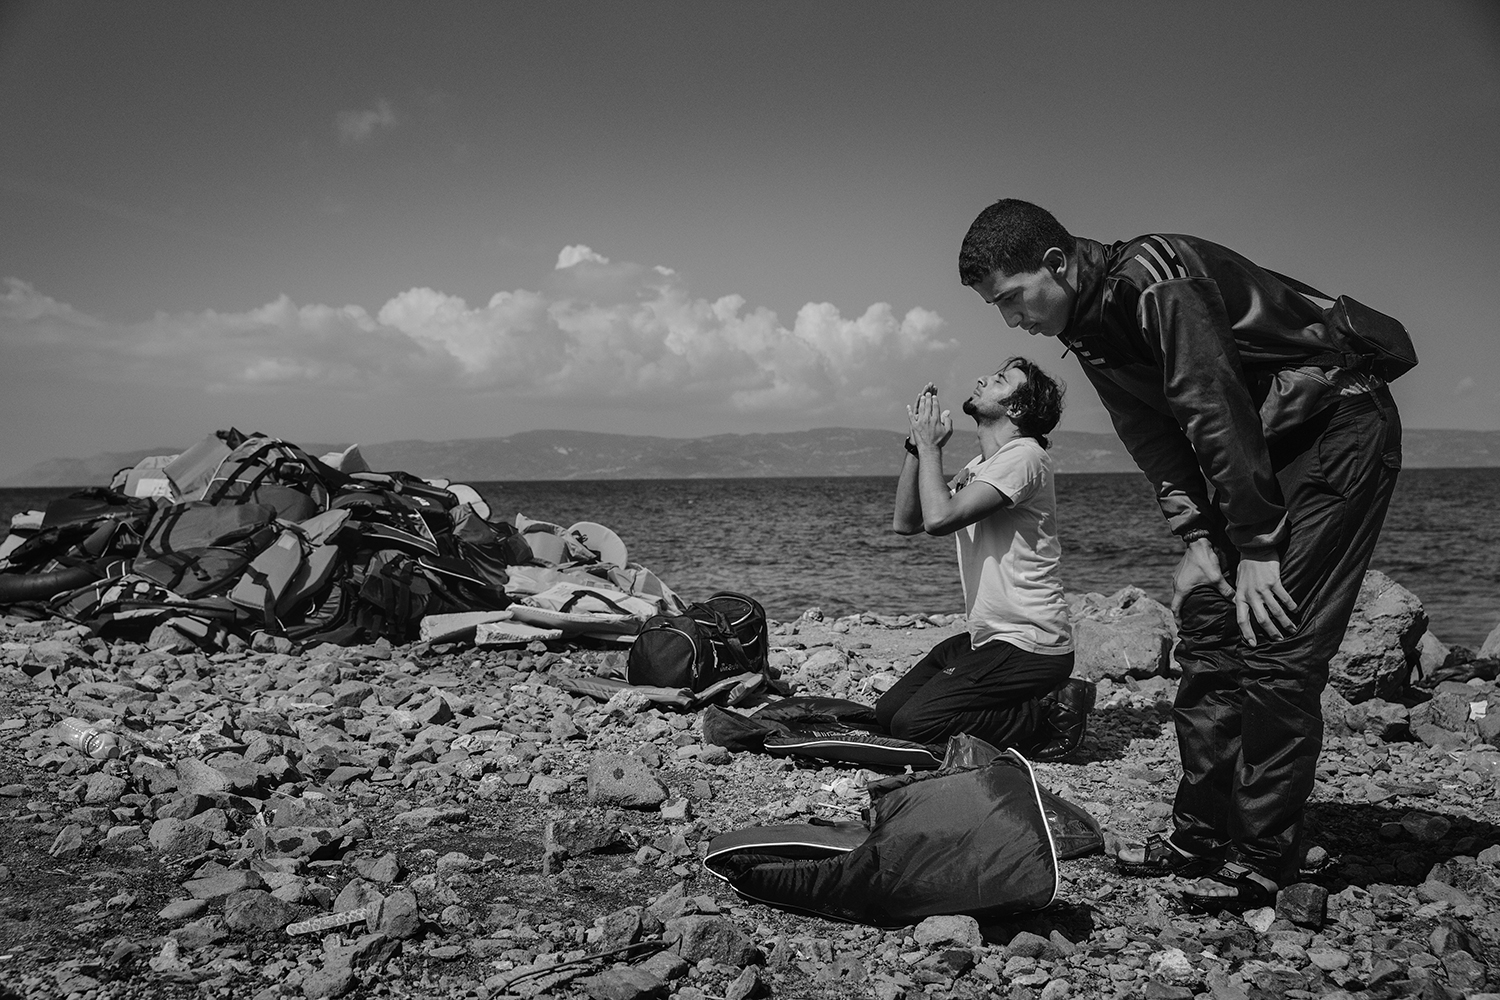 Muslim men pray upon reaching the beach in Lesbos, Greece, Sept. 25, 2015.